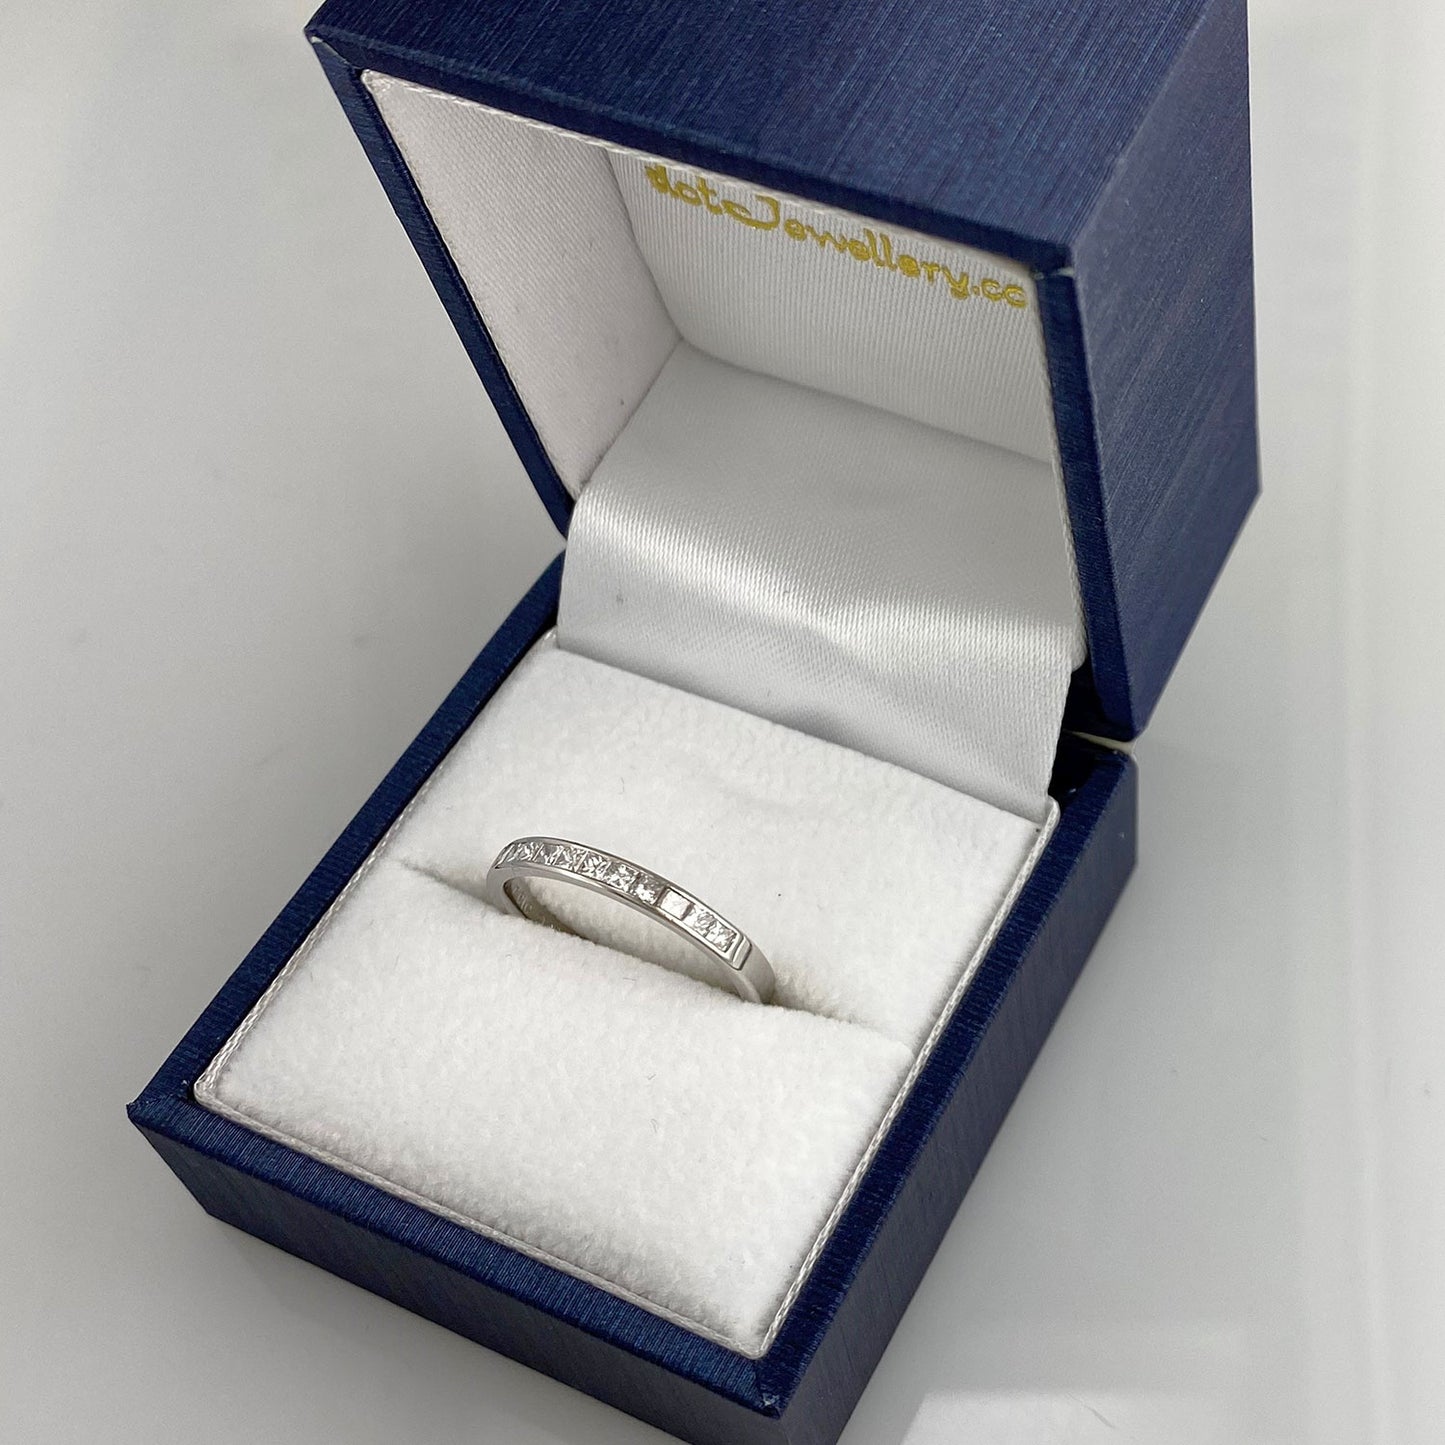 Channel Set Diamond 9ct White Gold 2.5mm Wedding Ring